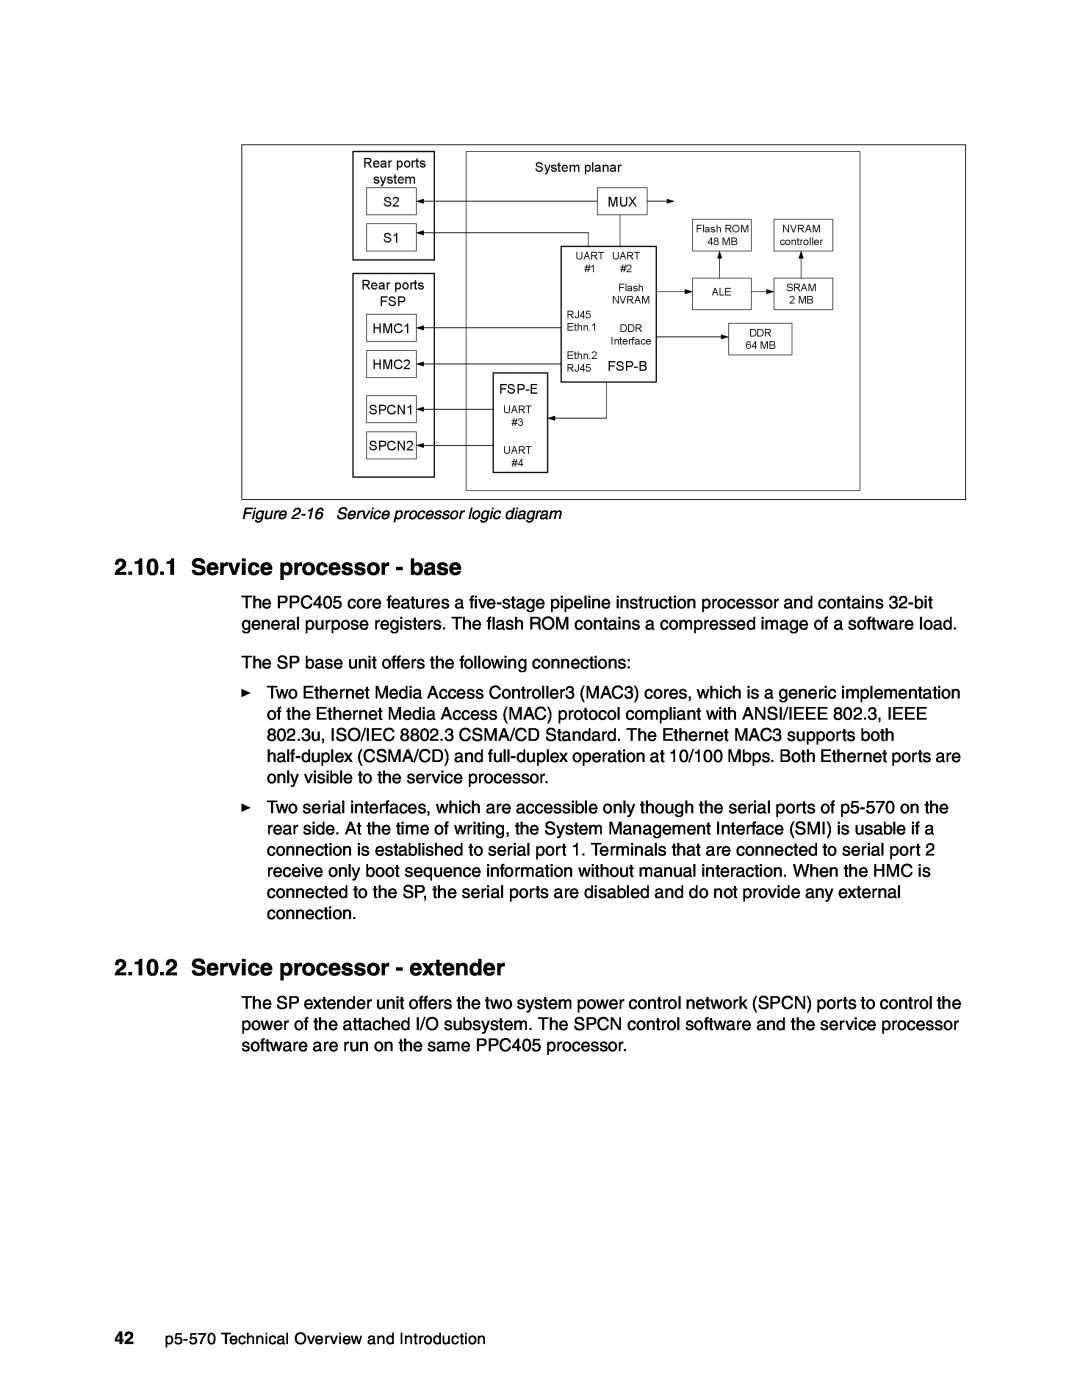 IBM P5 570 manual Service processor - base, 2.10.2Service processor - extender 